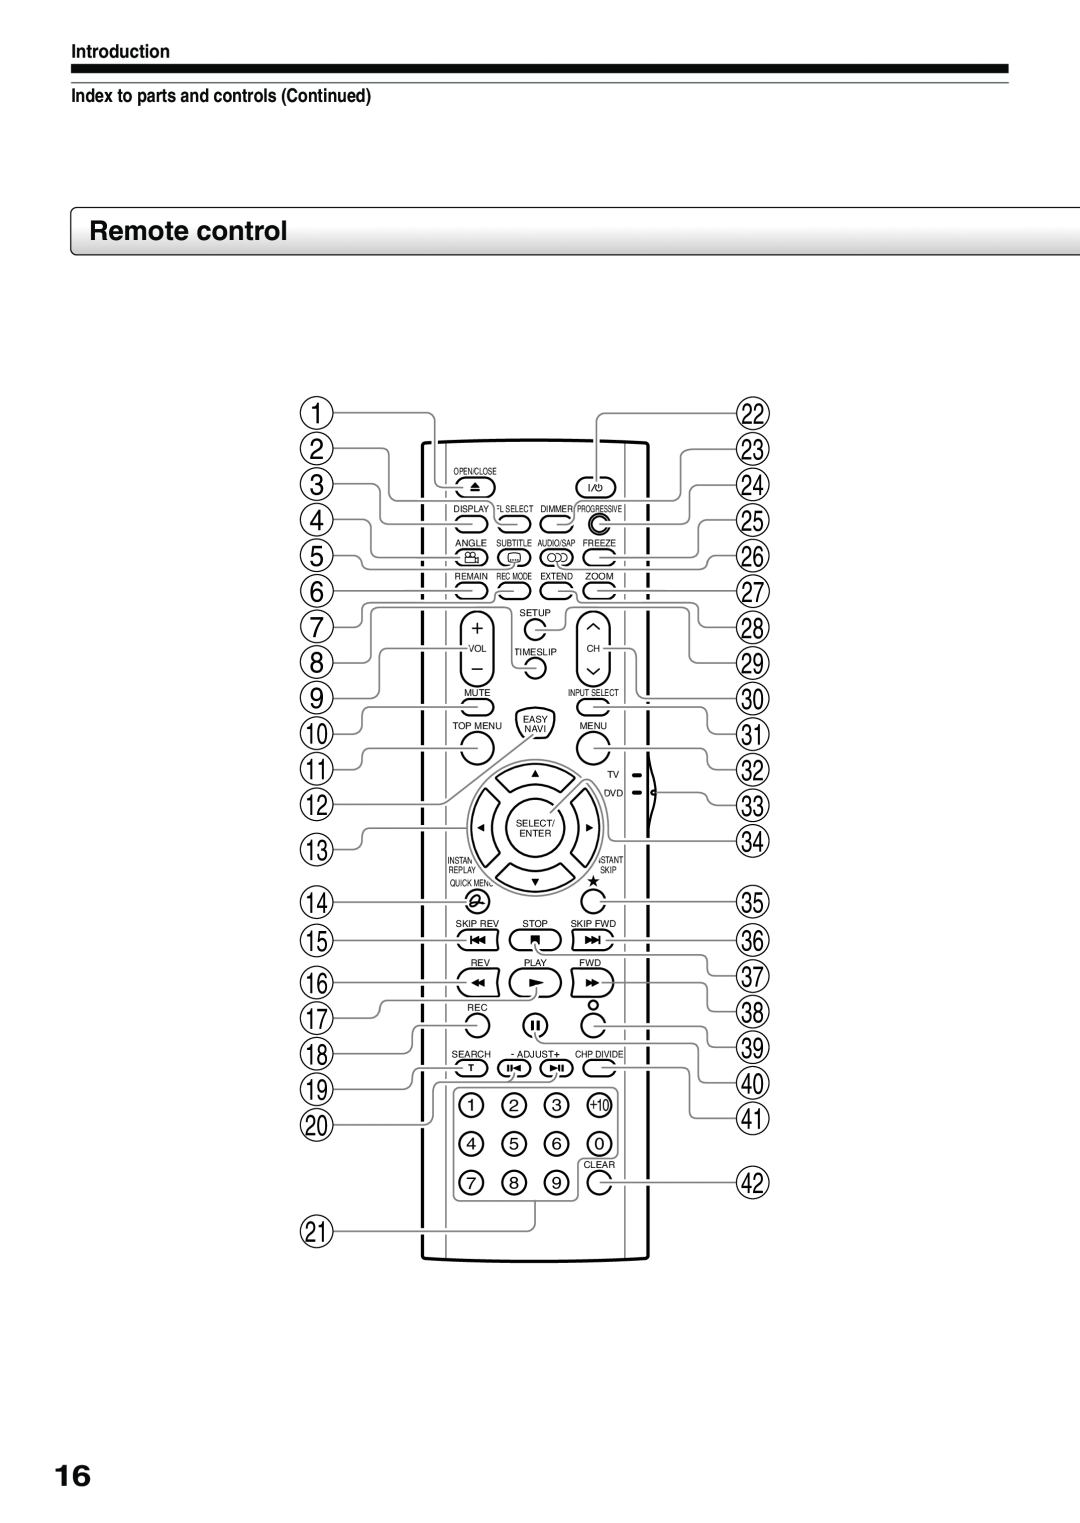 Toshiba D-R4SU Remote control, 1 2 3 4 5 6 7 8 9 10 11 12 13 14 15 16 17 18 19, 20 21, 38 39 40 41 42, Introduction 